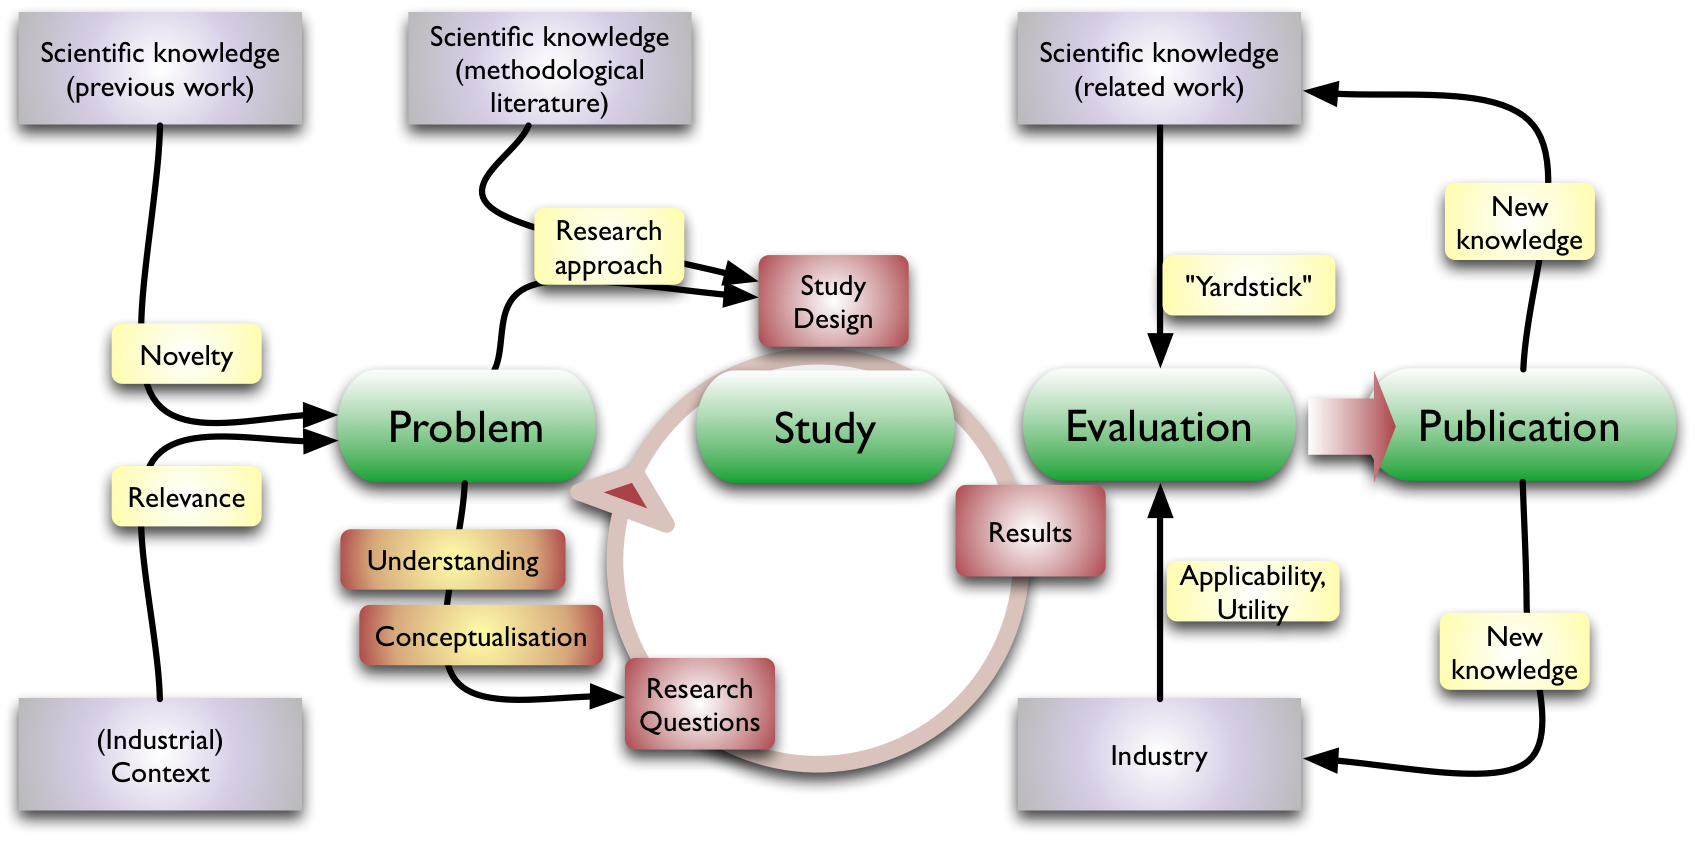 Scientific topic. Scientific research methodology. Scientific Literature. Scientific Novelty of the research. Research Project.